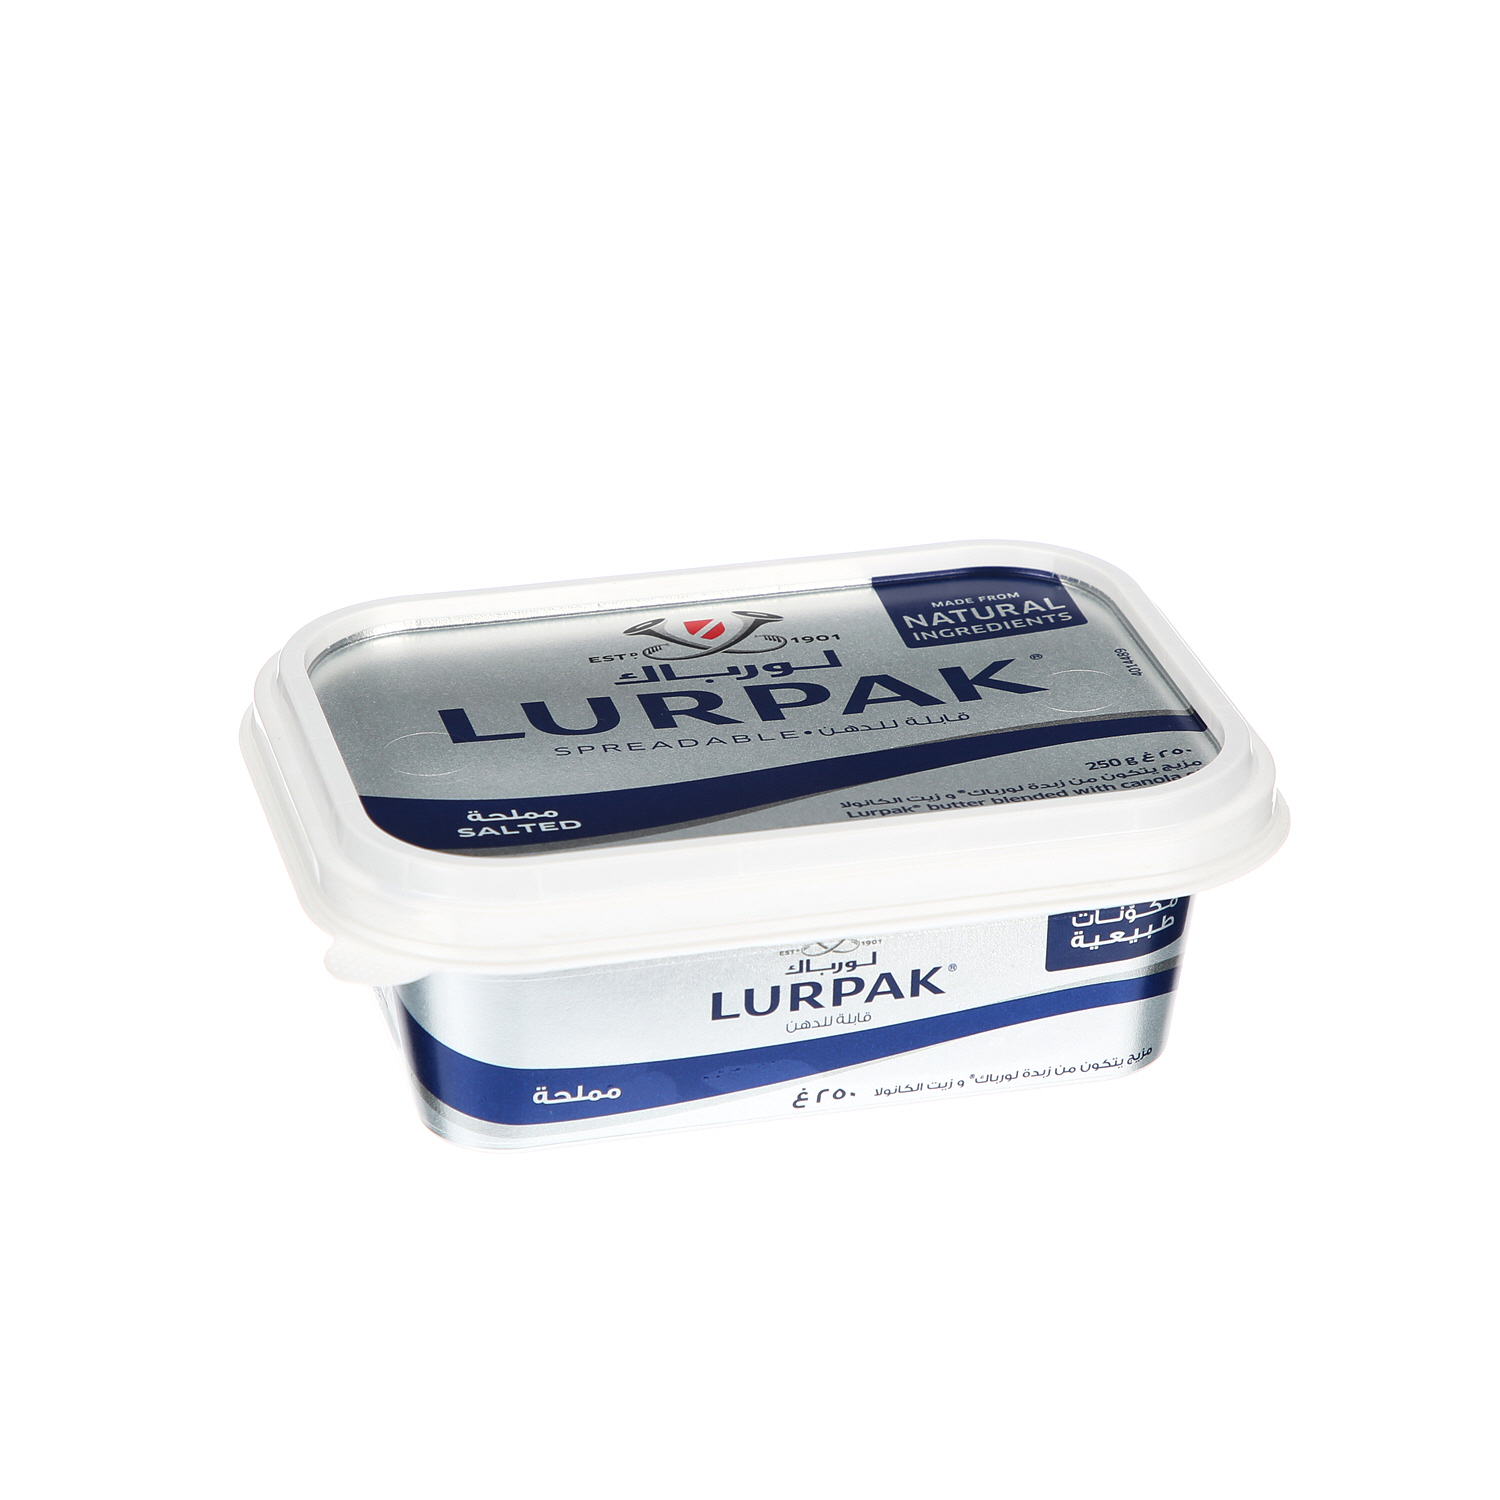 Lurpak Butter Spreadable Salted 250gm